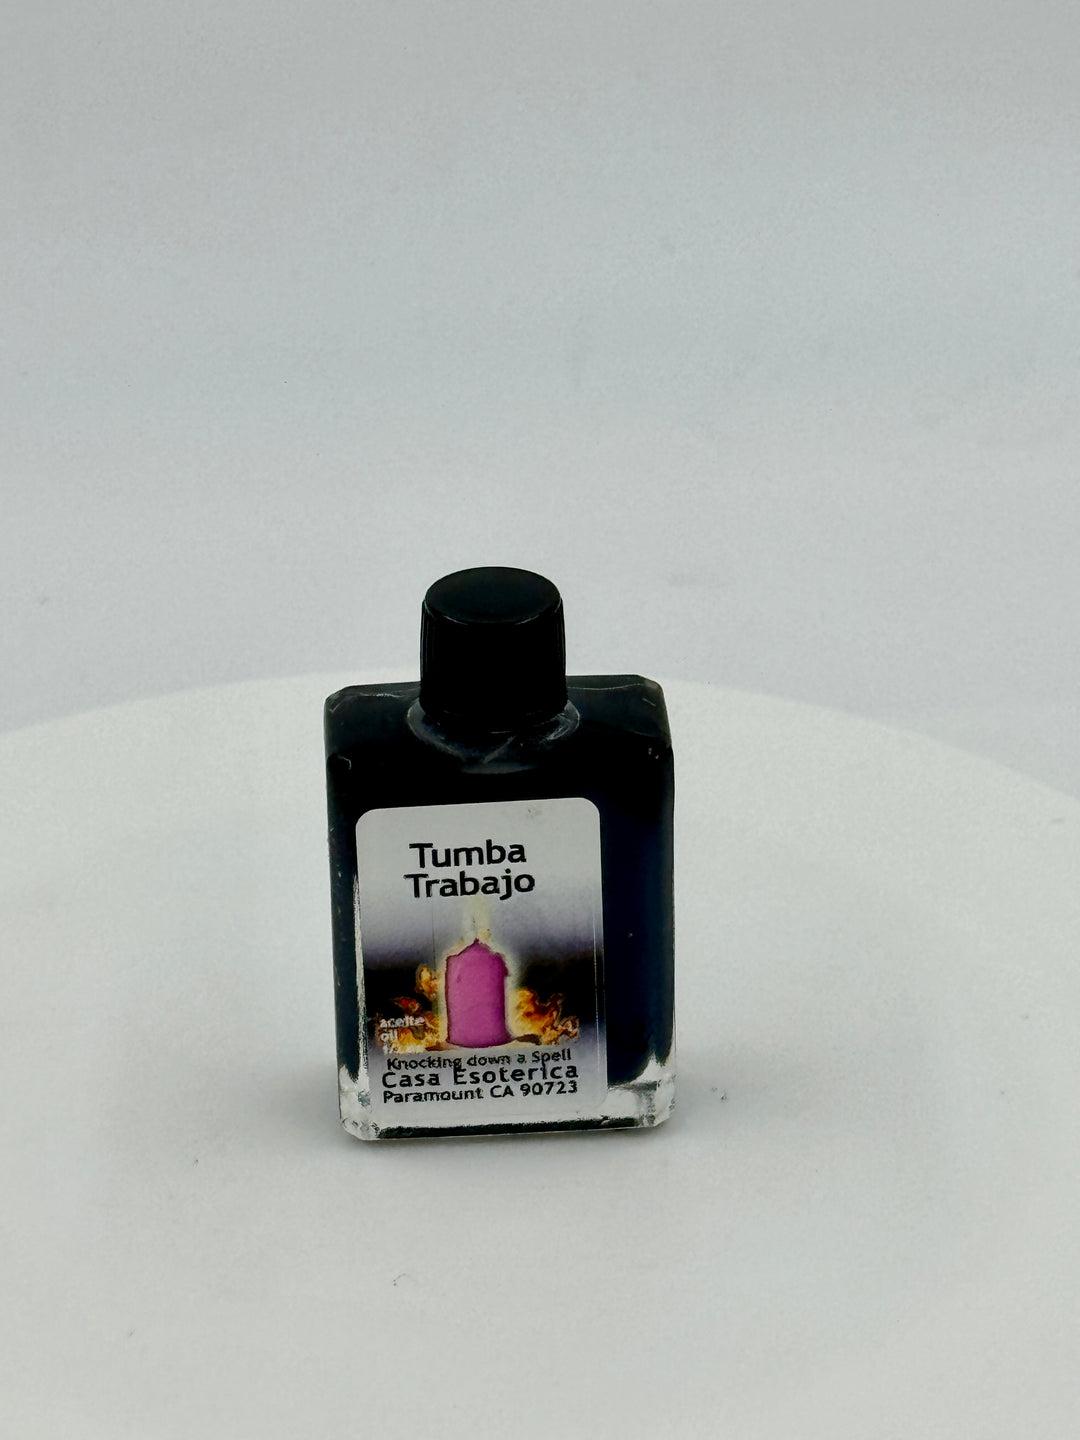 KNOCKING DOWN A SPELL(TUMBA TRABAJO) -Oil/Aceite